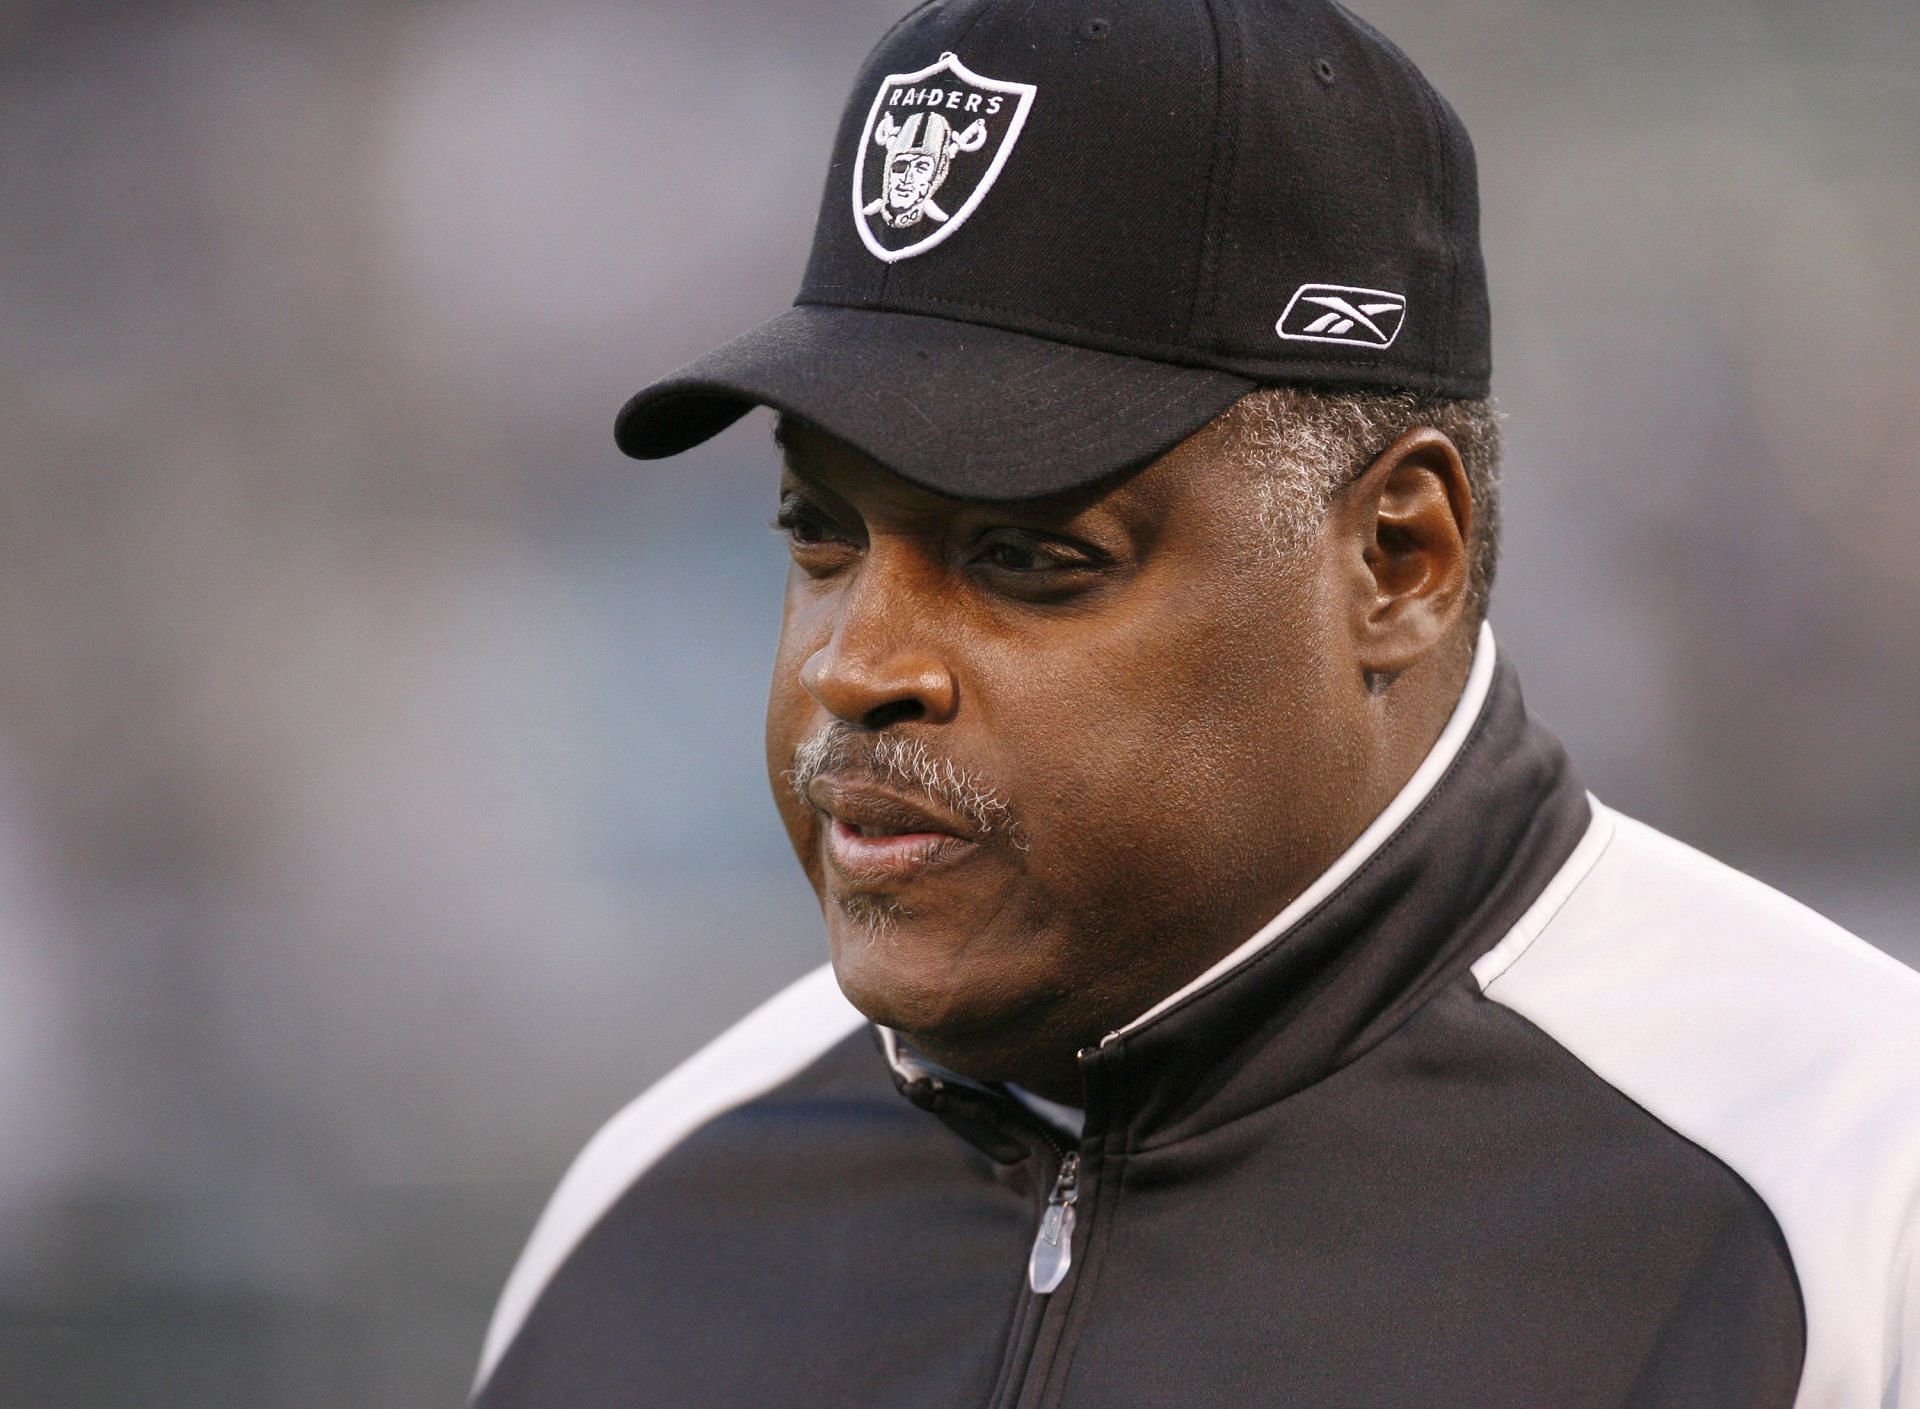 Oakland Raiders head coach Art Shell